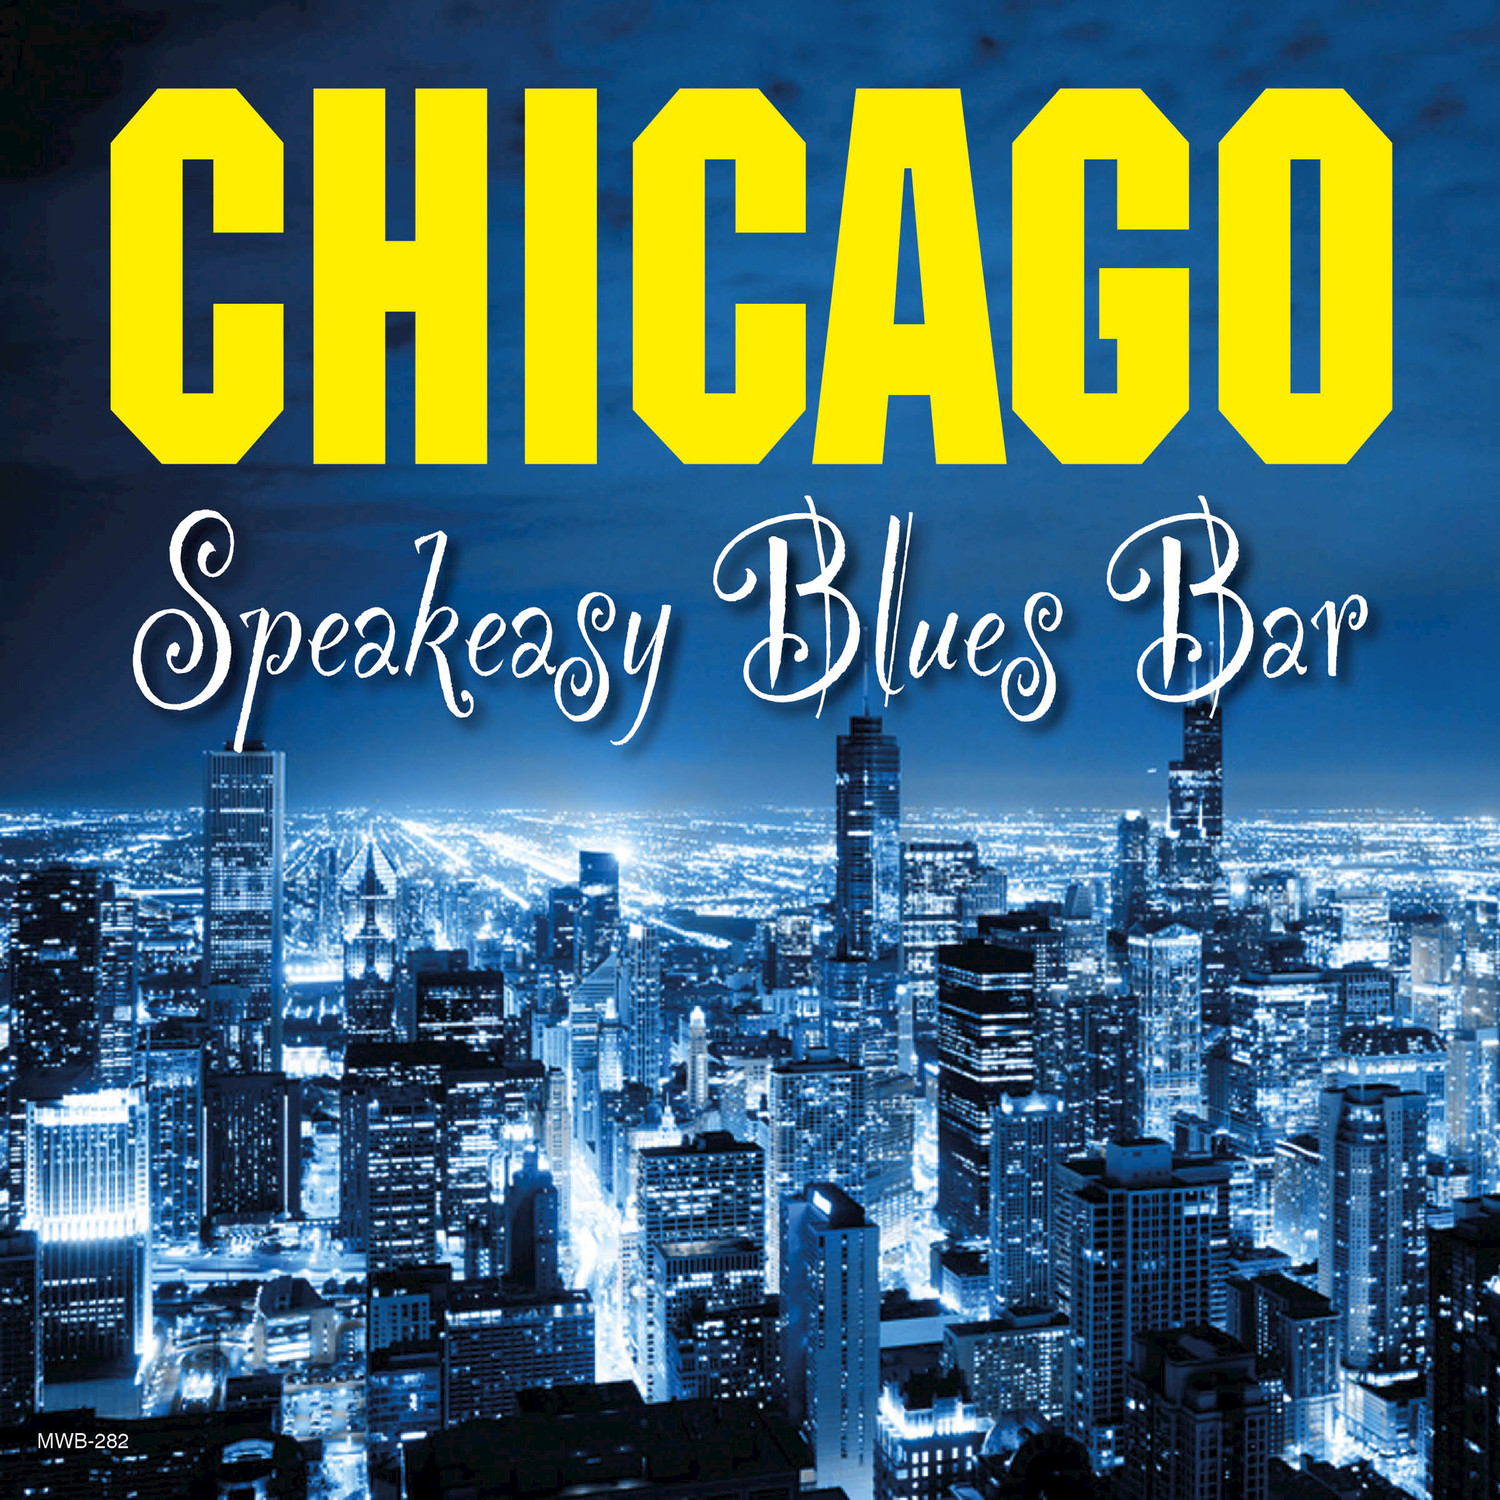 Chicago Speakeasy Blues Bar